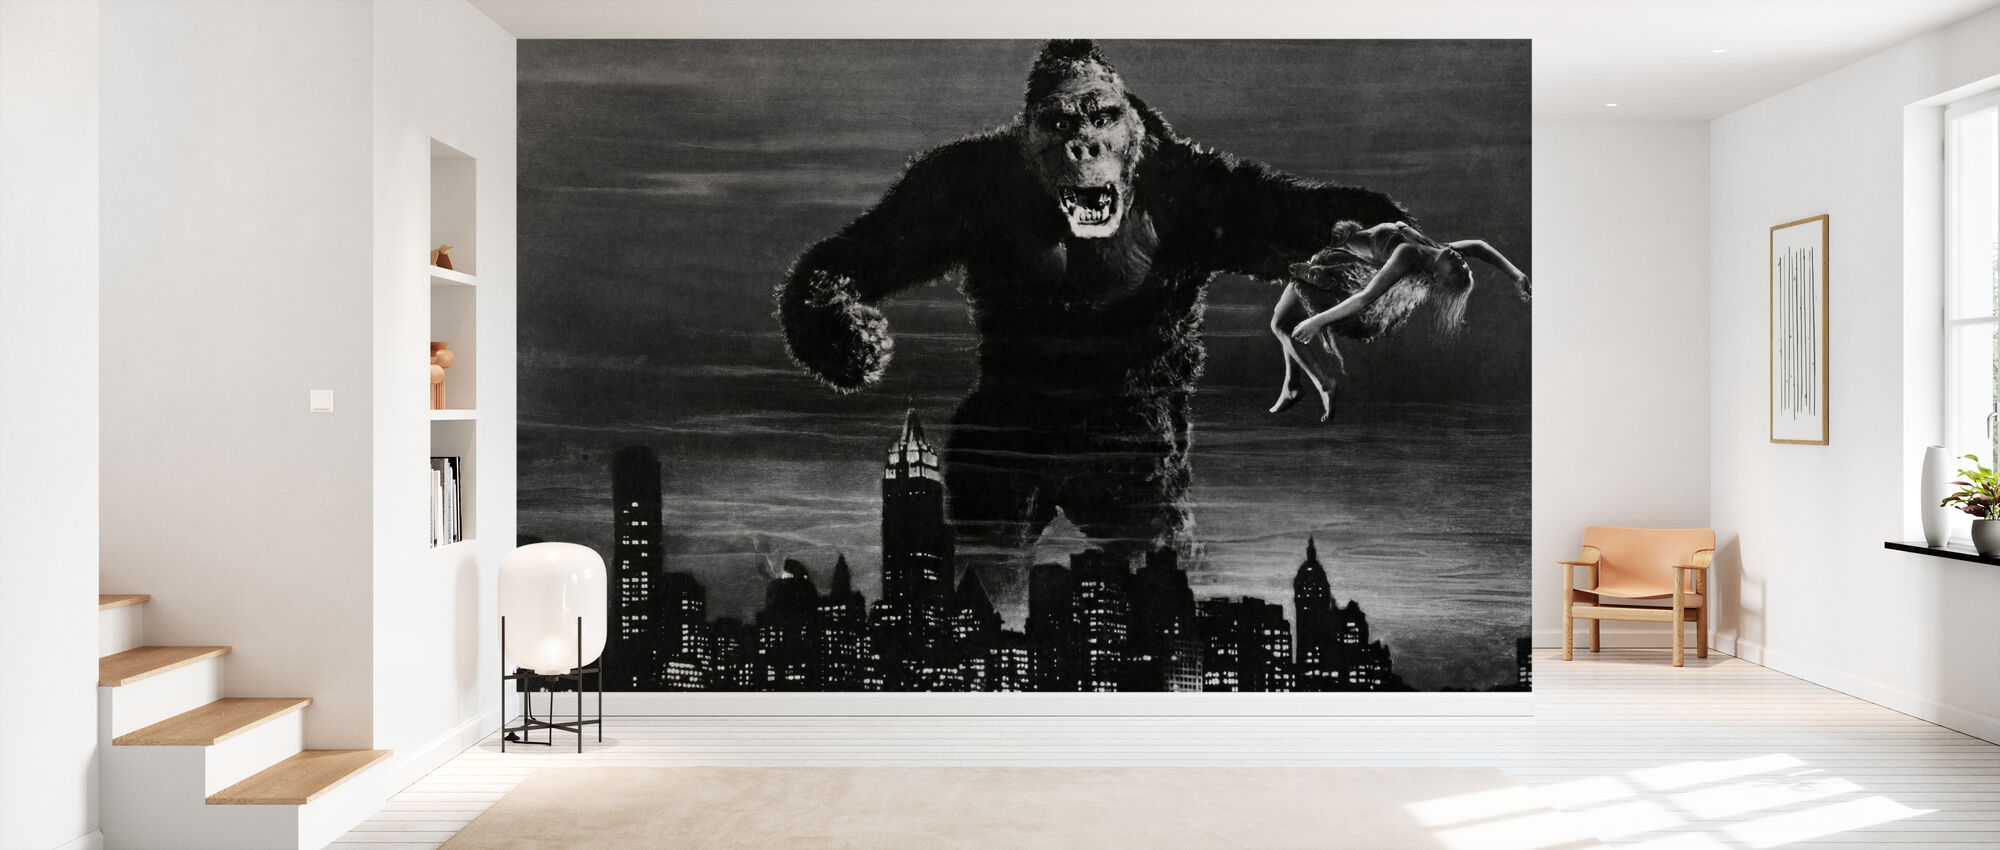 King Kong – made-to-measure wall mural – Photowall